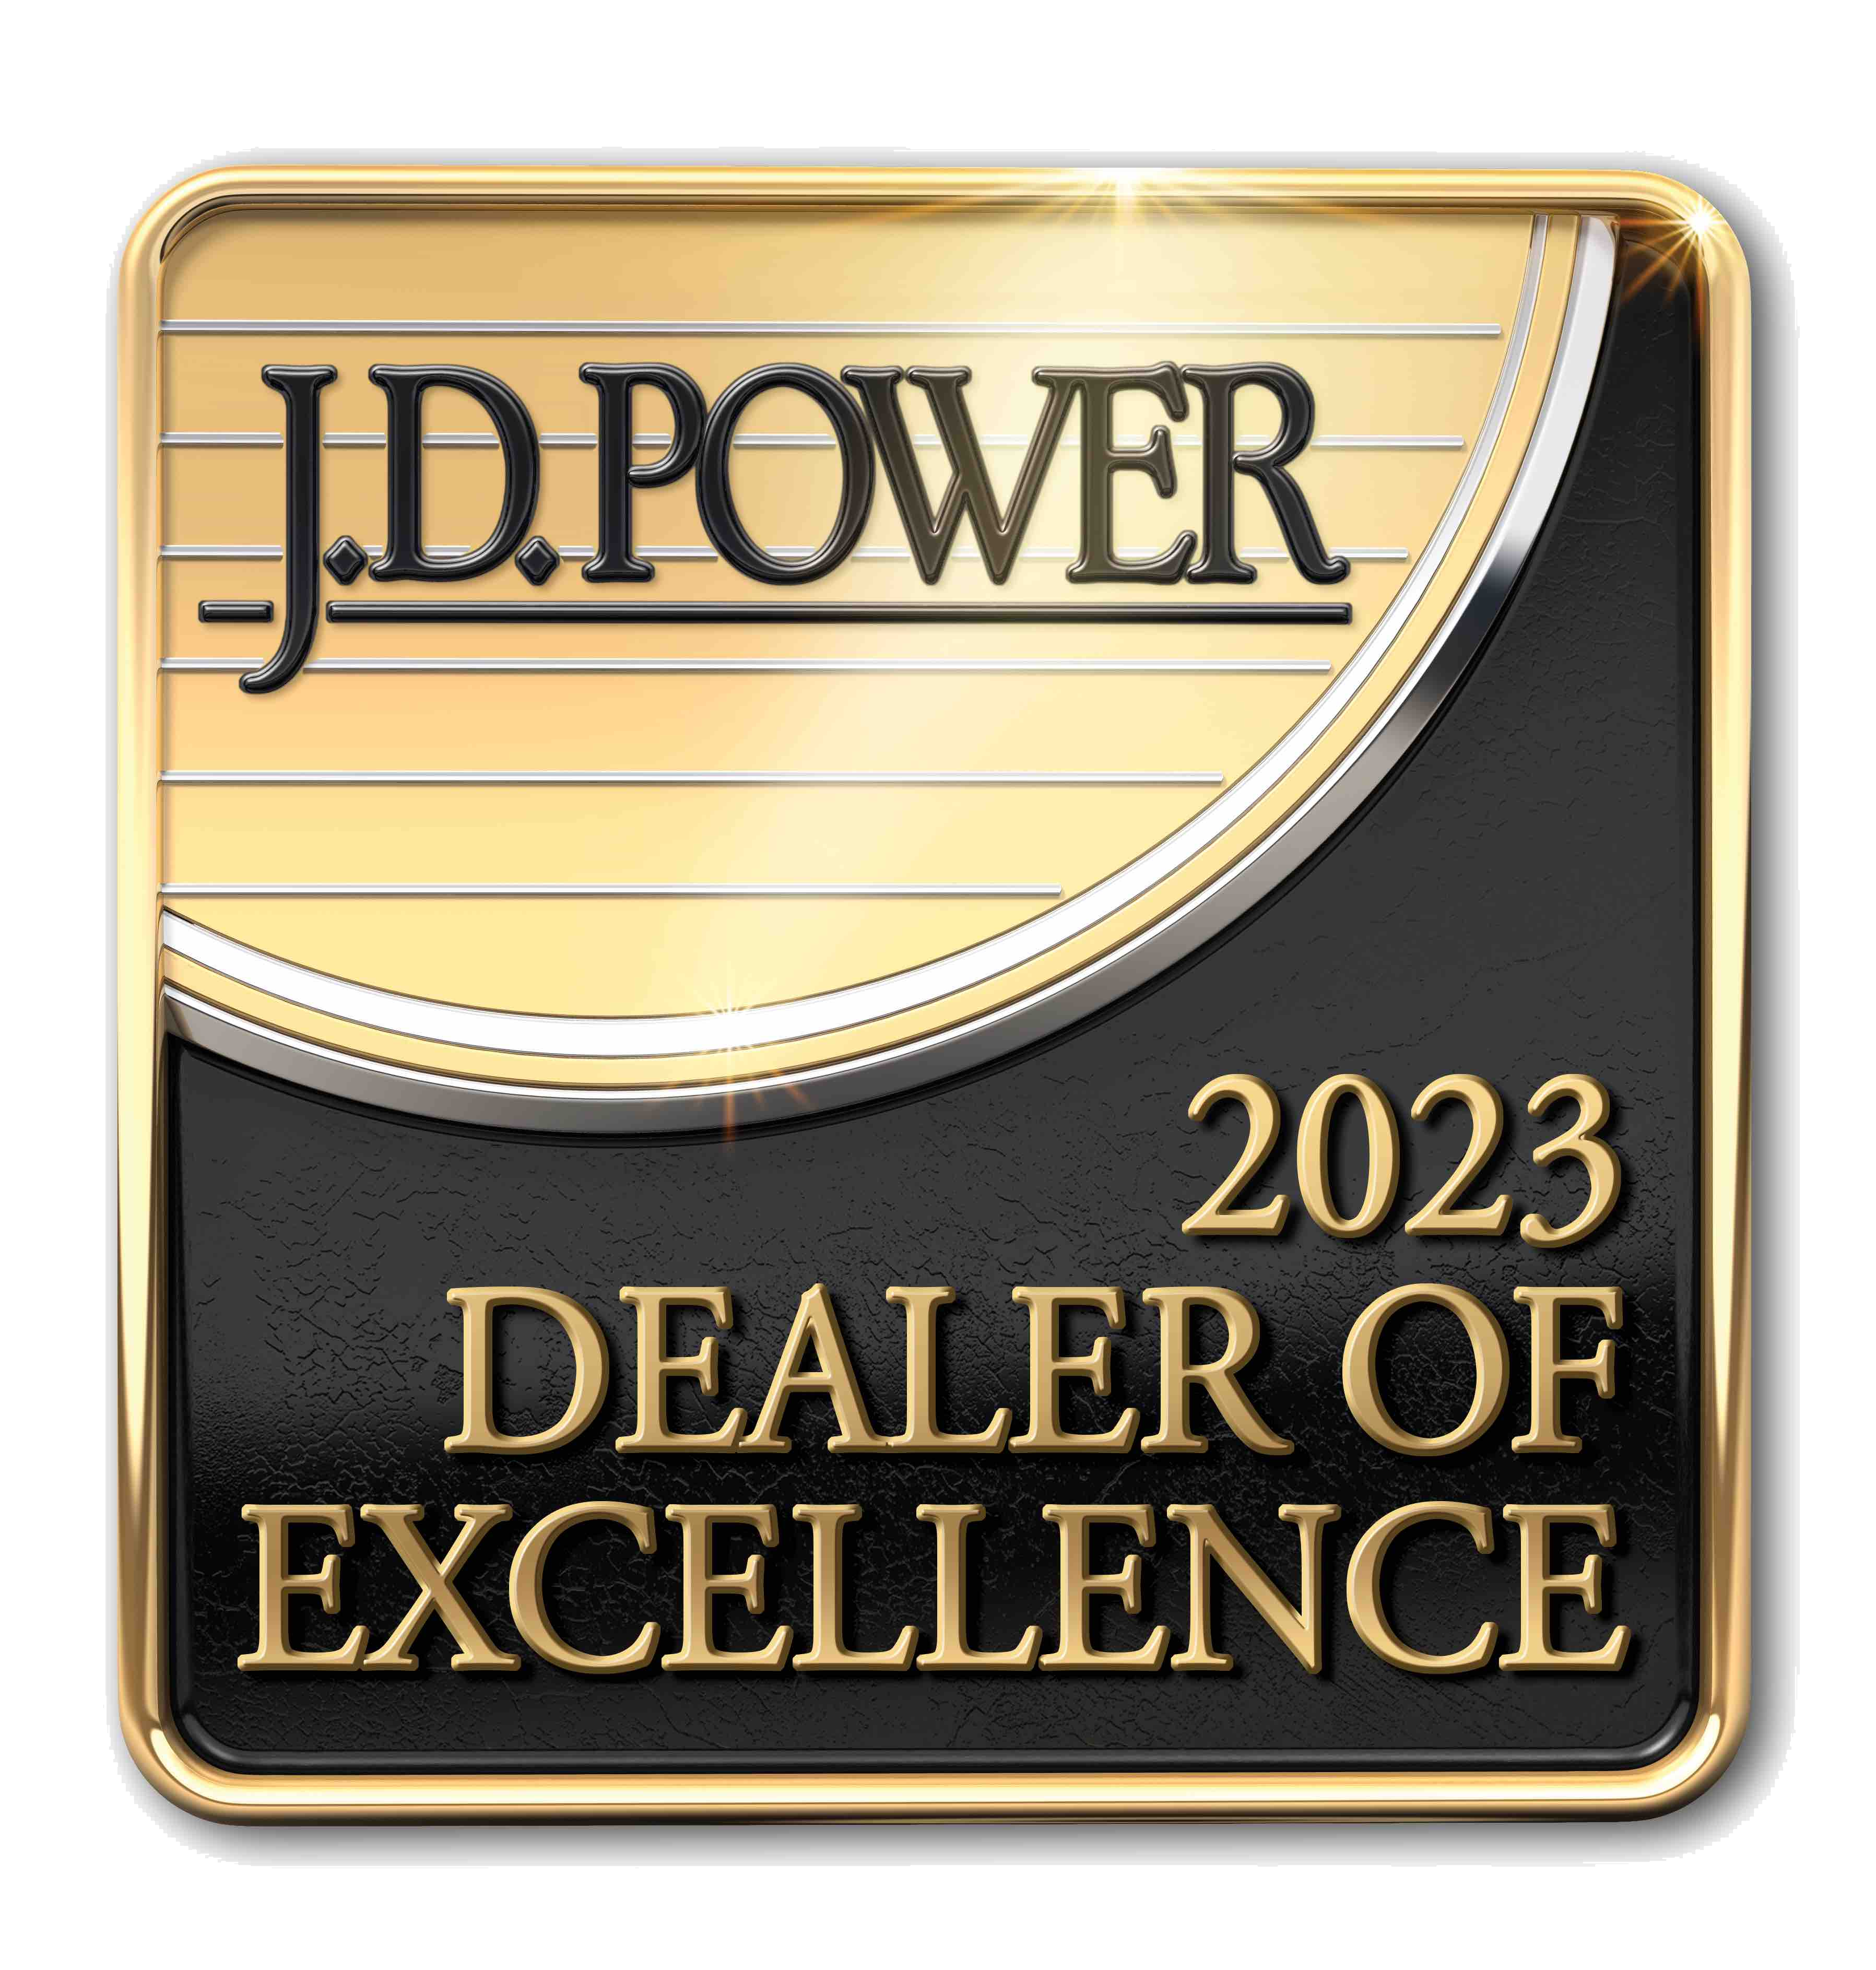 2023 JD Power Dealer of Excellence Award